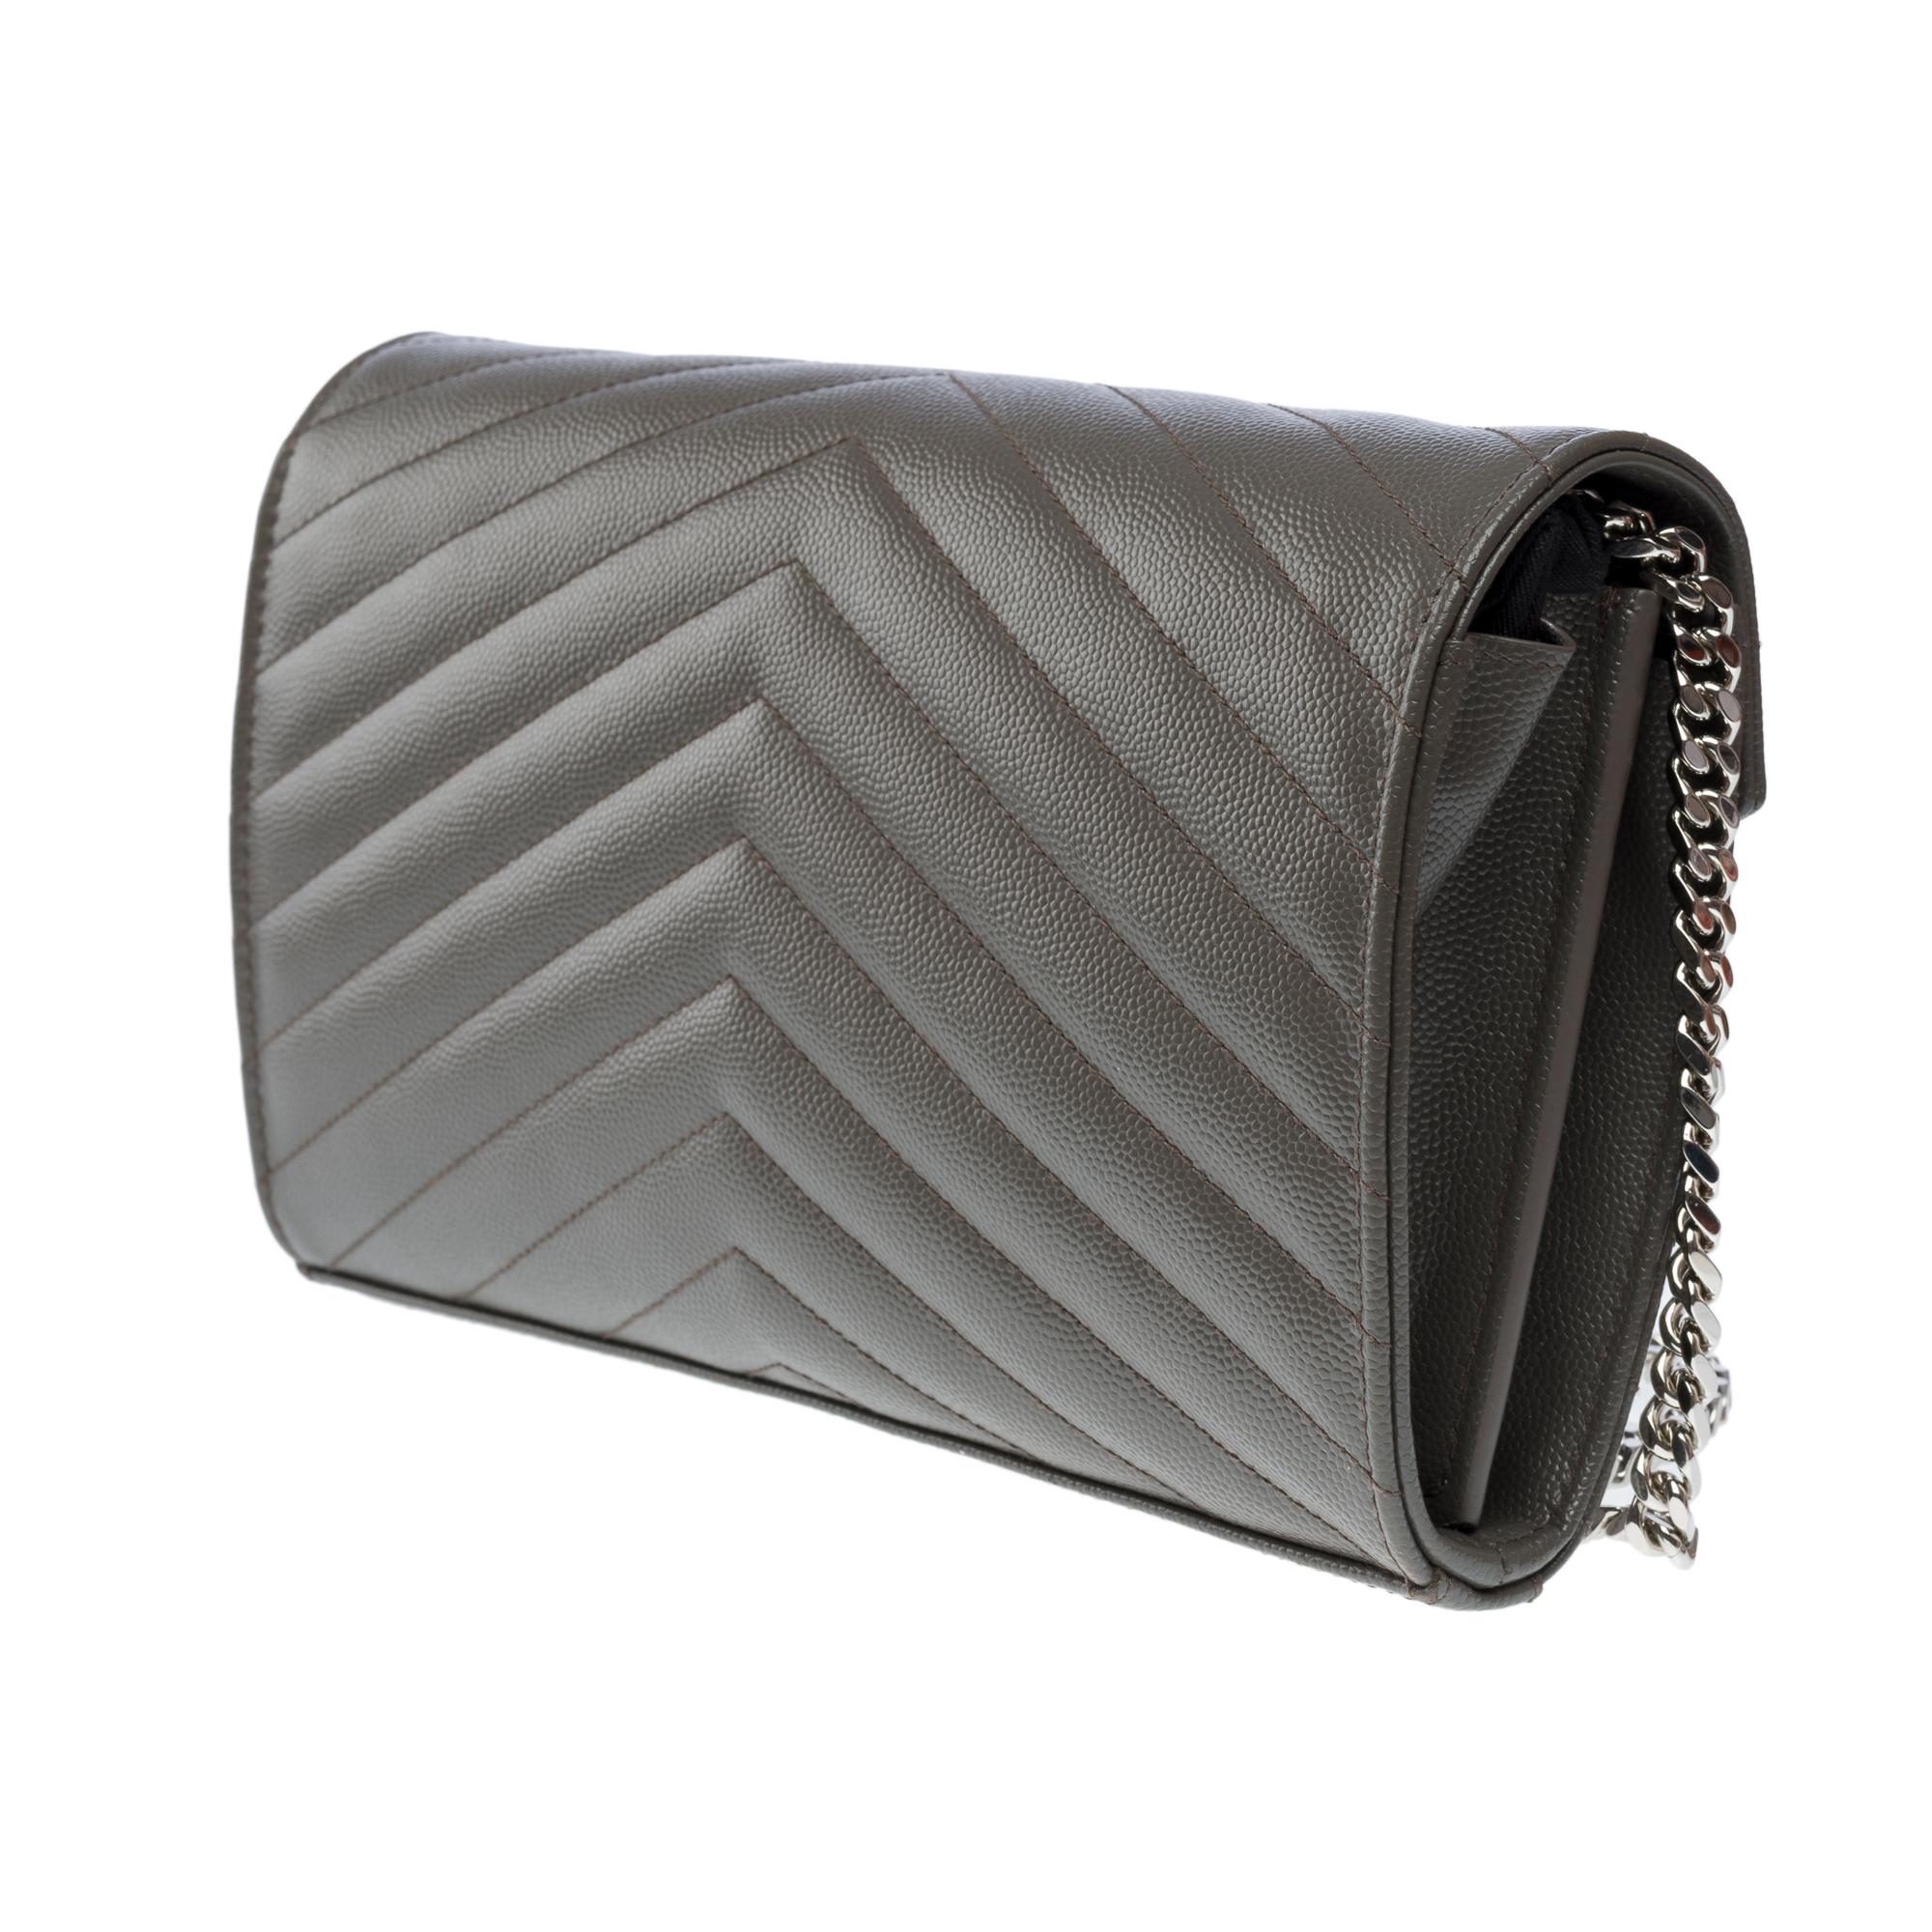 New YSL Pochette Cassandre classic shoulder bag in Grey leather, SHW For Sale 3